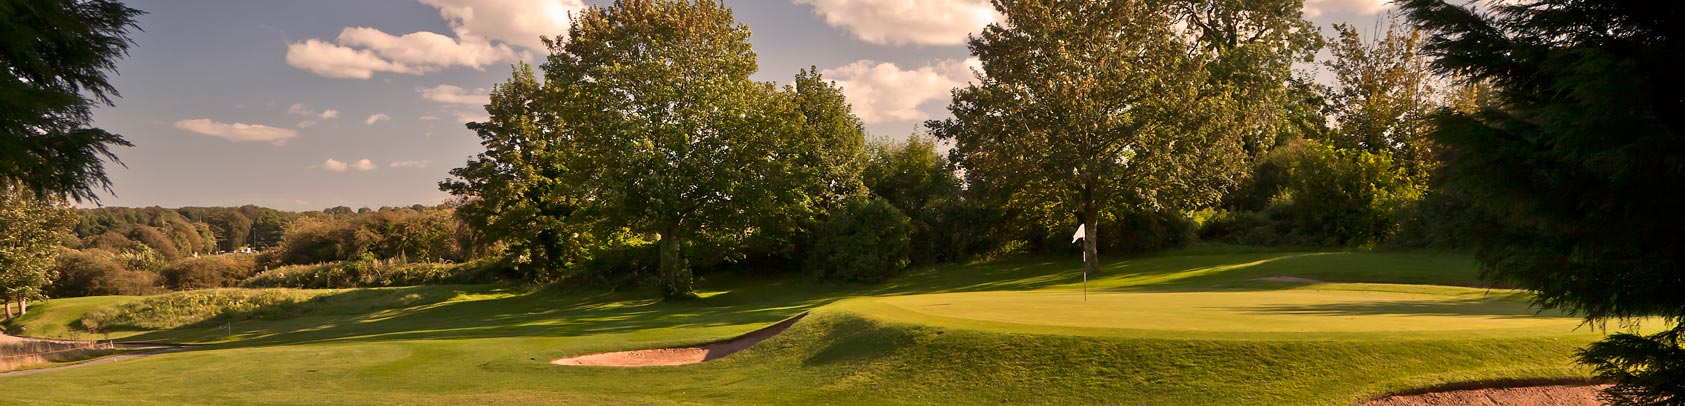 Golfing Cardiff, Members Golf Wales, Golf Club in Wales